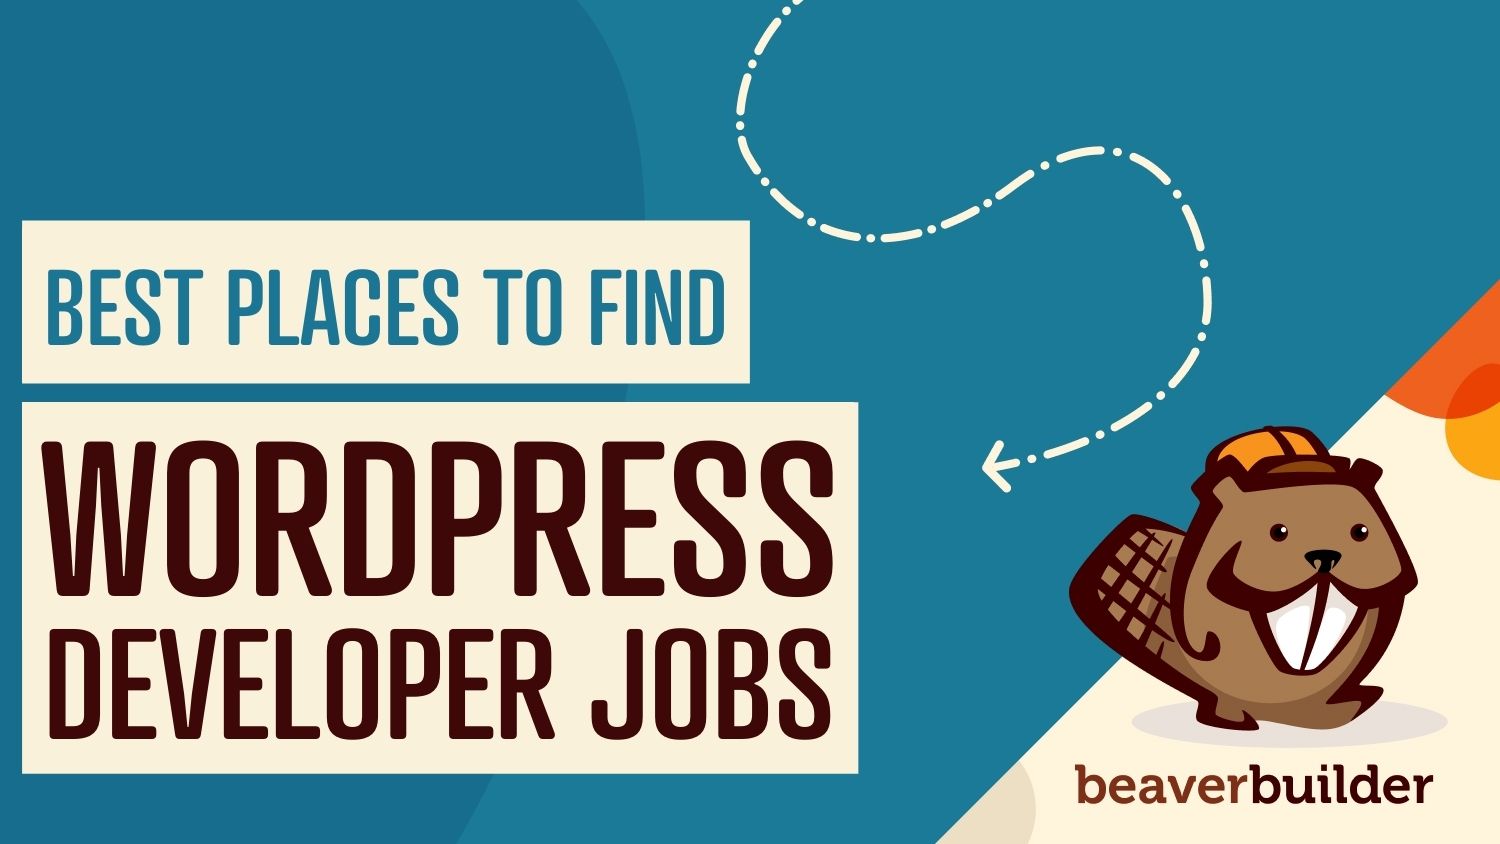 8 Best Places to Find WordPress Developer Jobs